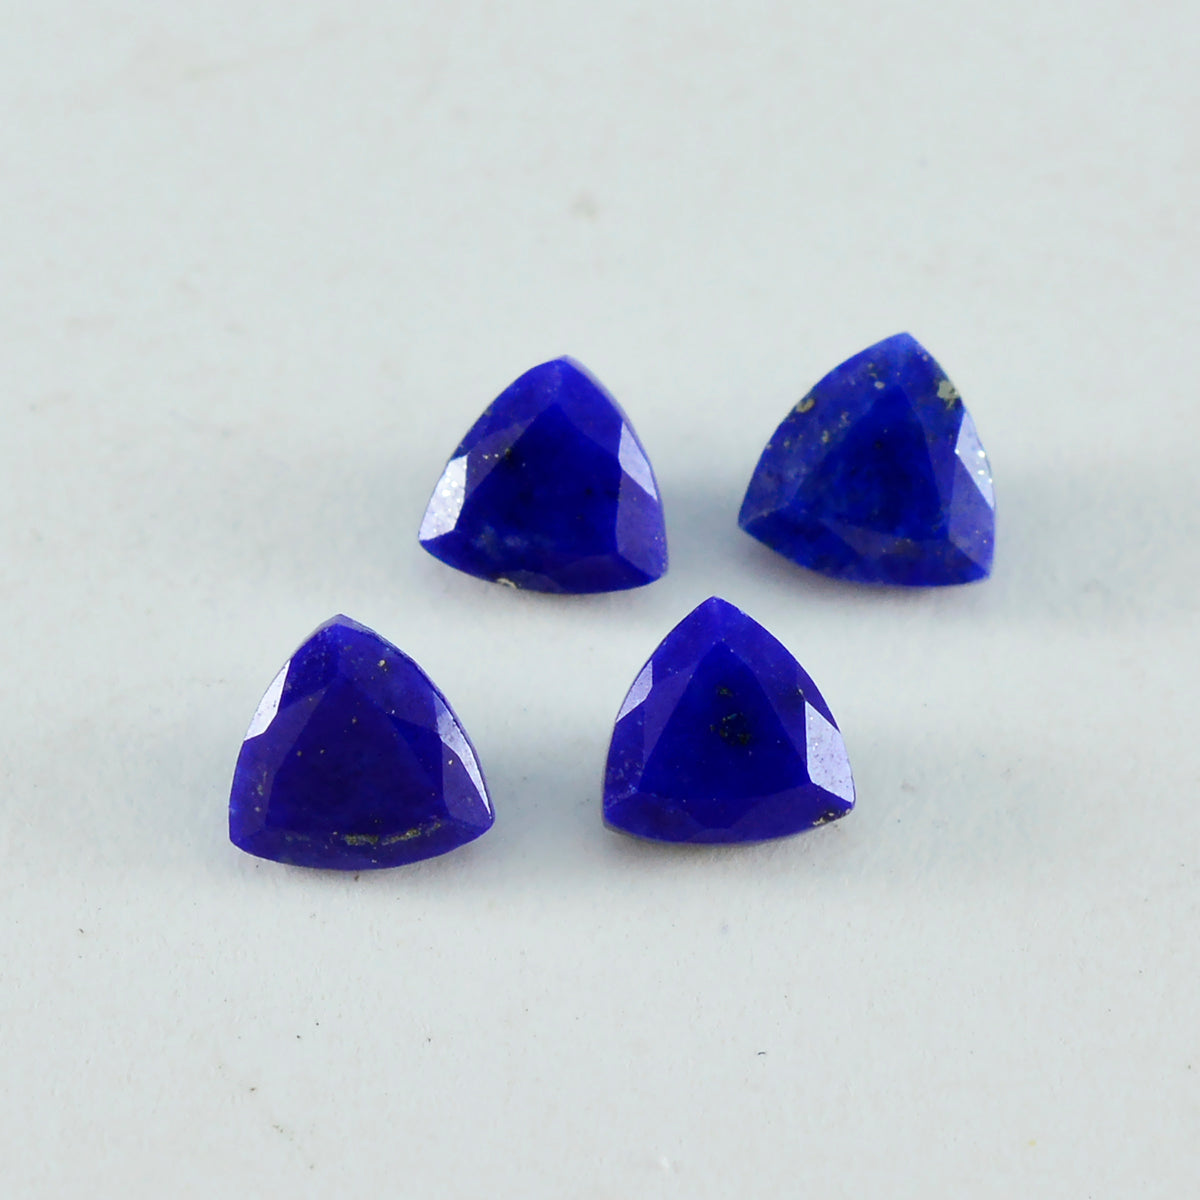 Riyogems 1PC Natuurlijke Blauwe Lapis Lazuli Facet 8x8 mm Biljoen Vorm verbazingwekkende Kwaliteit Losse Steen